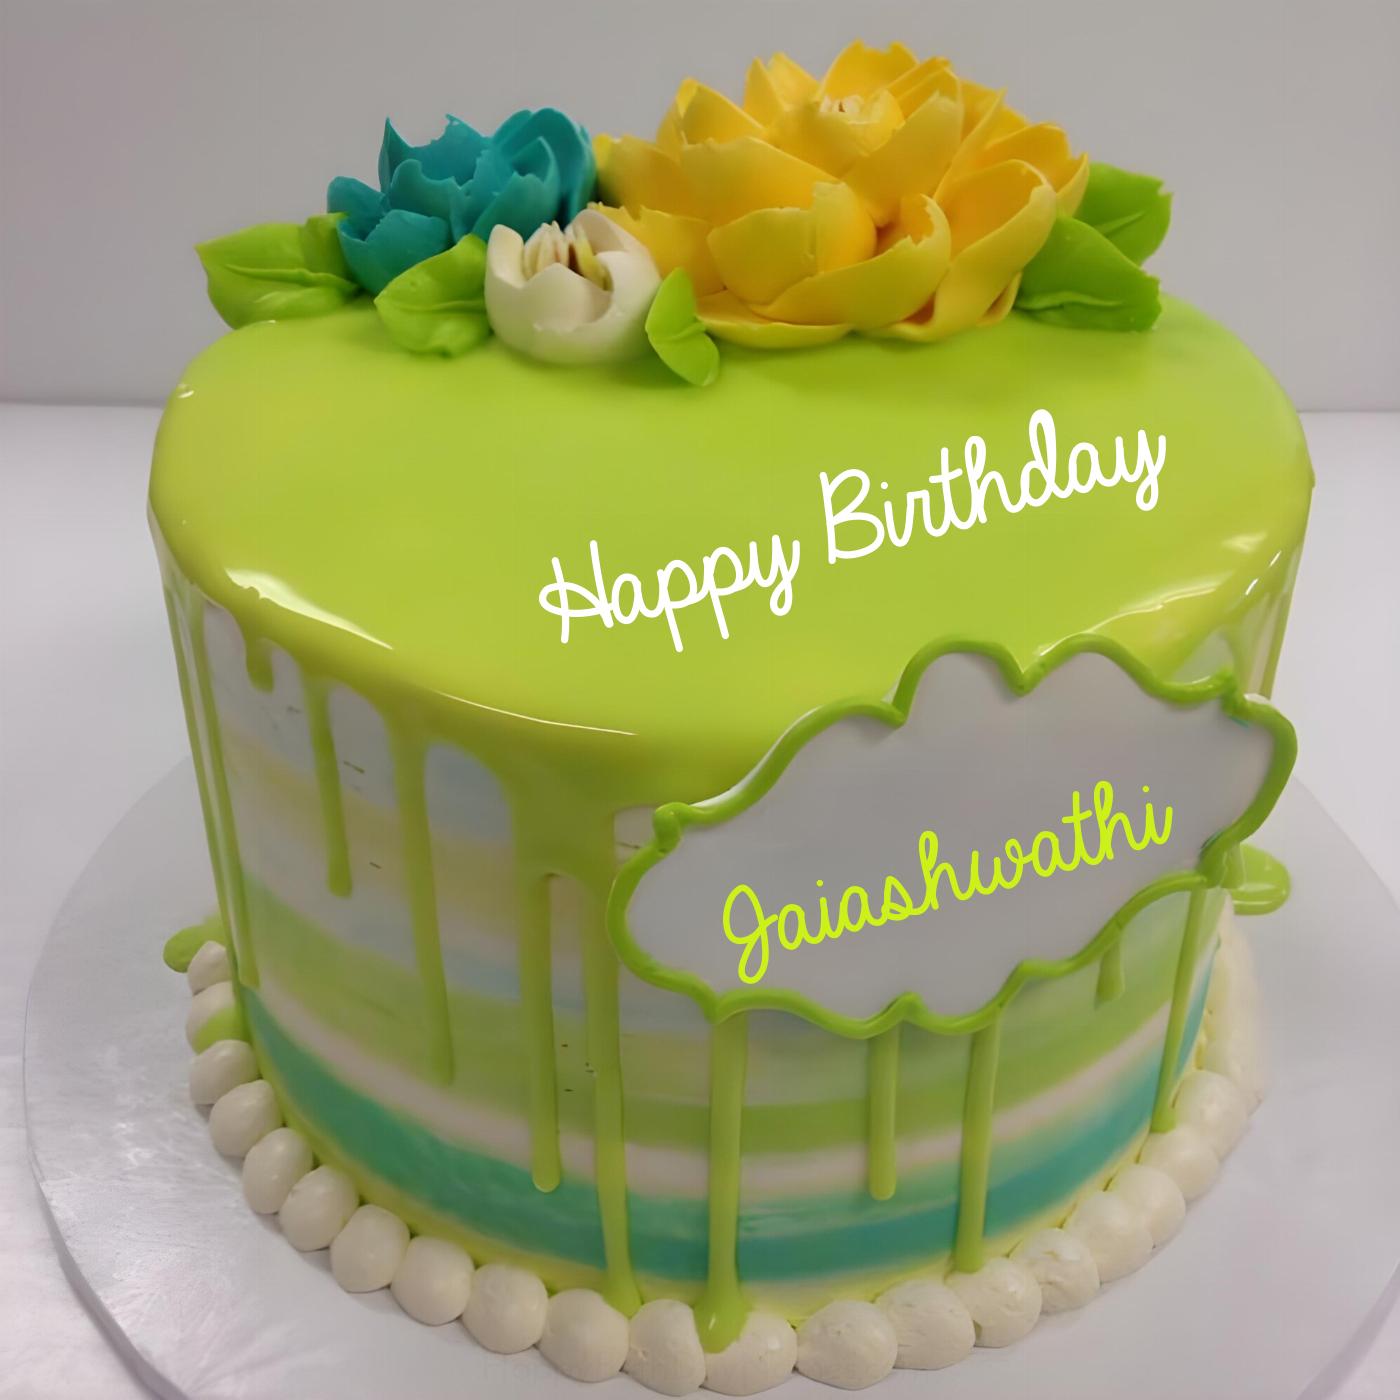 Happy Birthday Jaiashwathi Green Flowers Cake